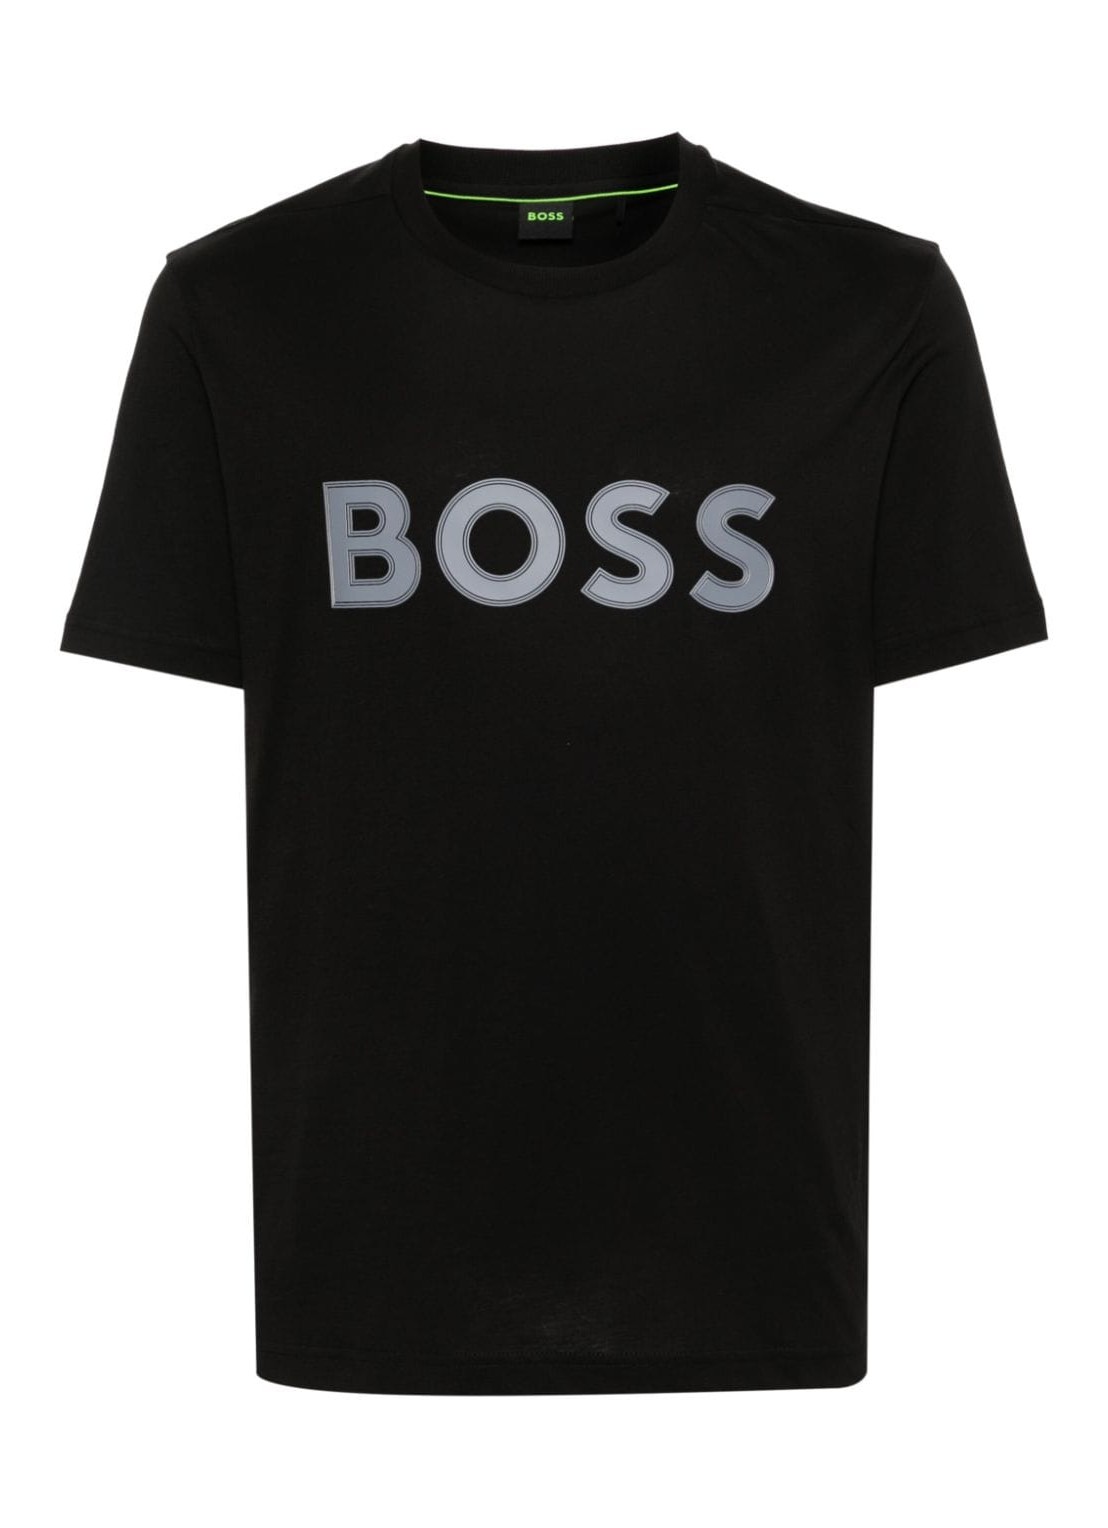 Camiseta boss t-shirt man tee 1 50506344 001 talla XXL
 